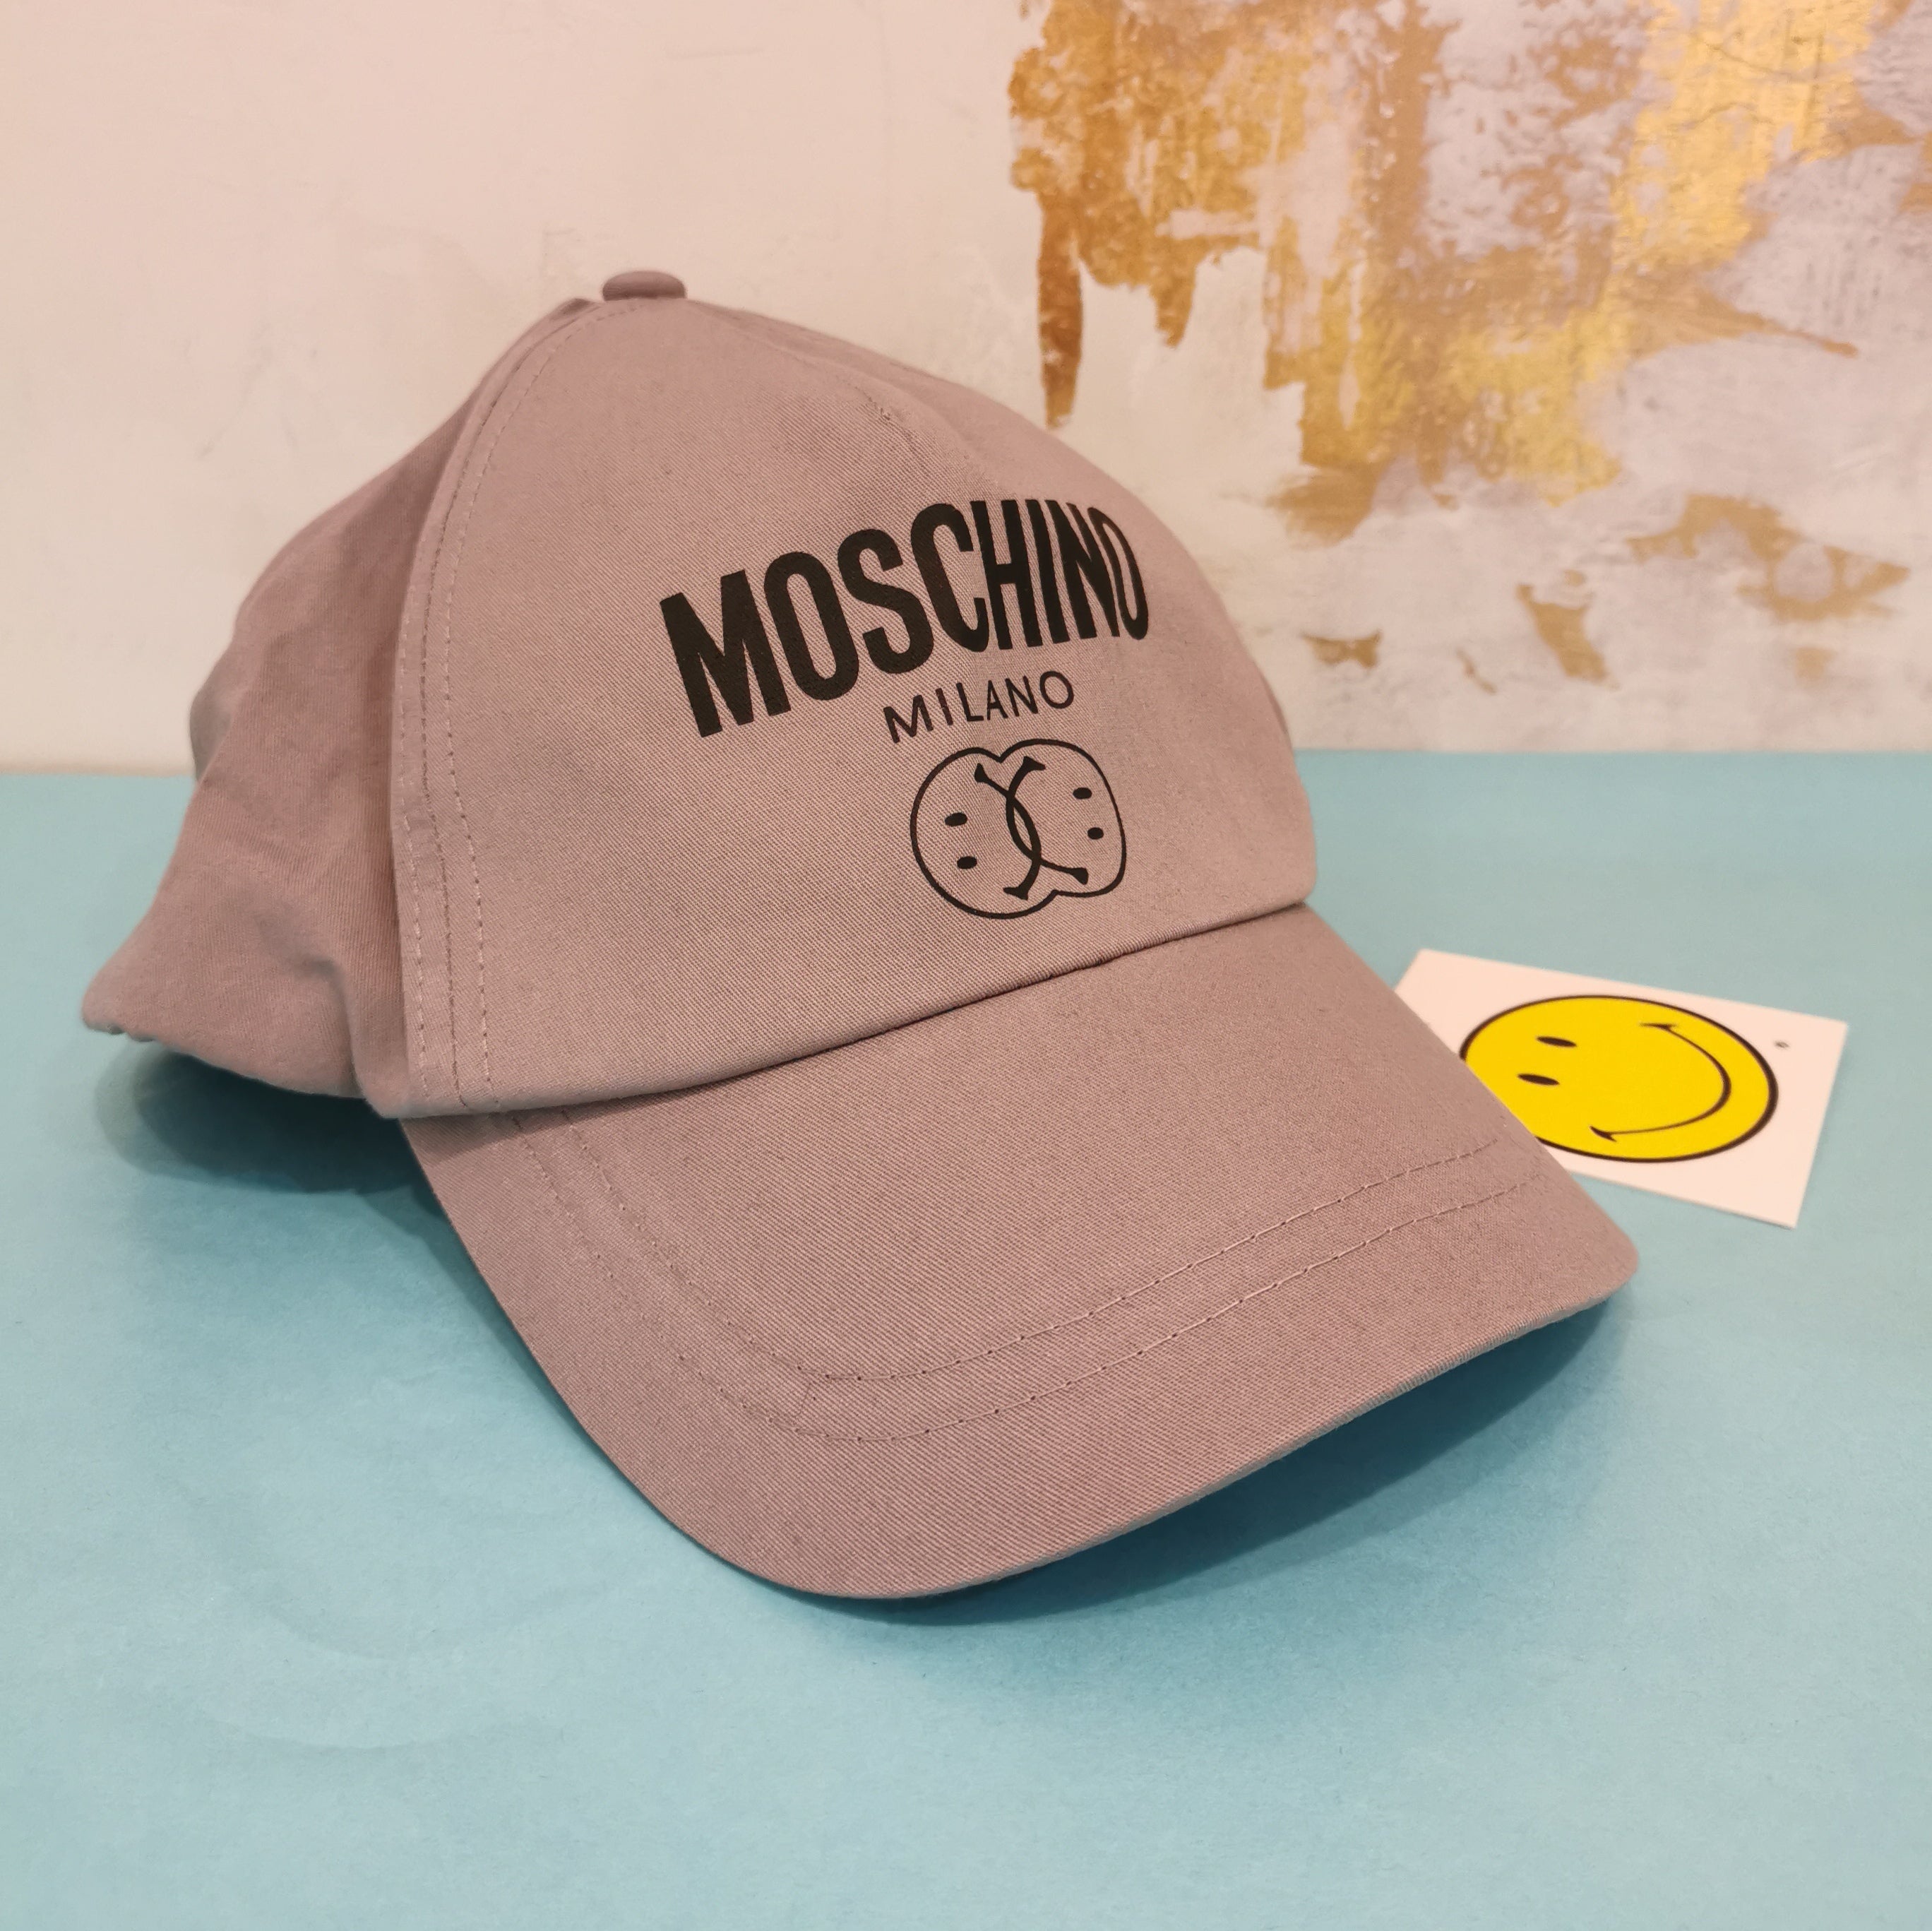 Moschino Mini Me Baseball Hat Milano Smiley